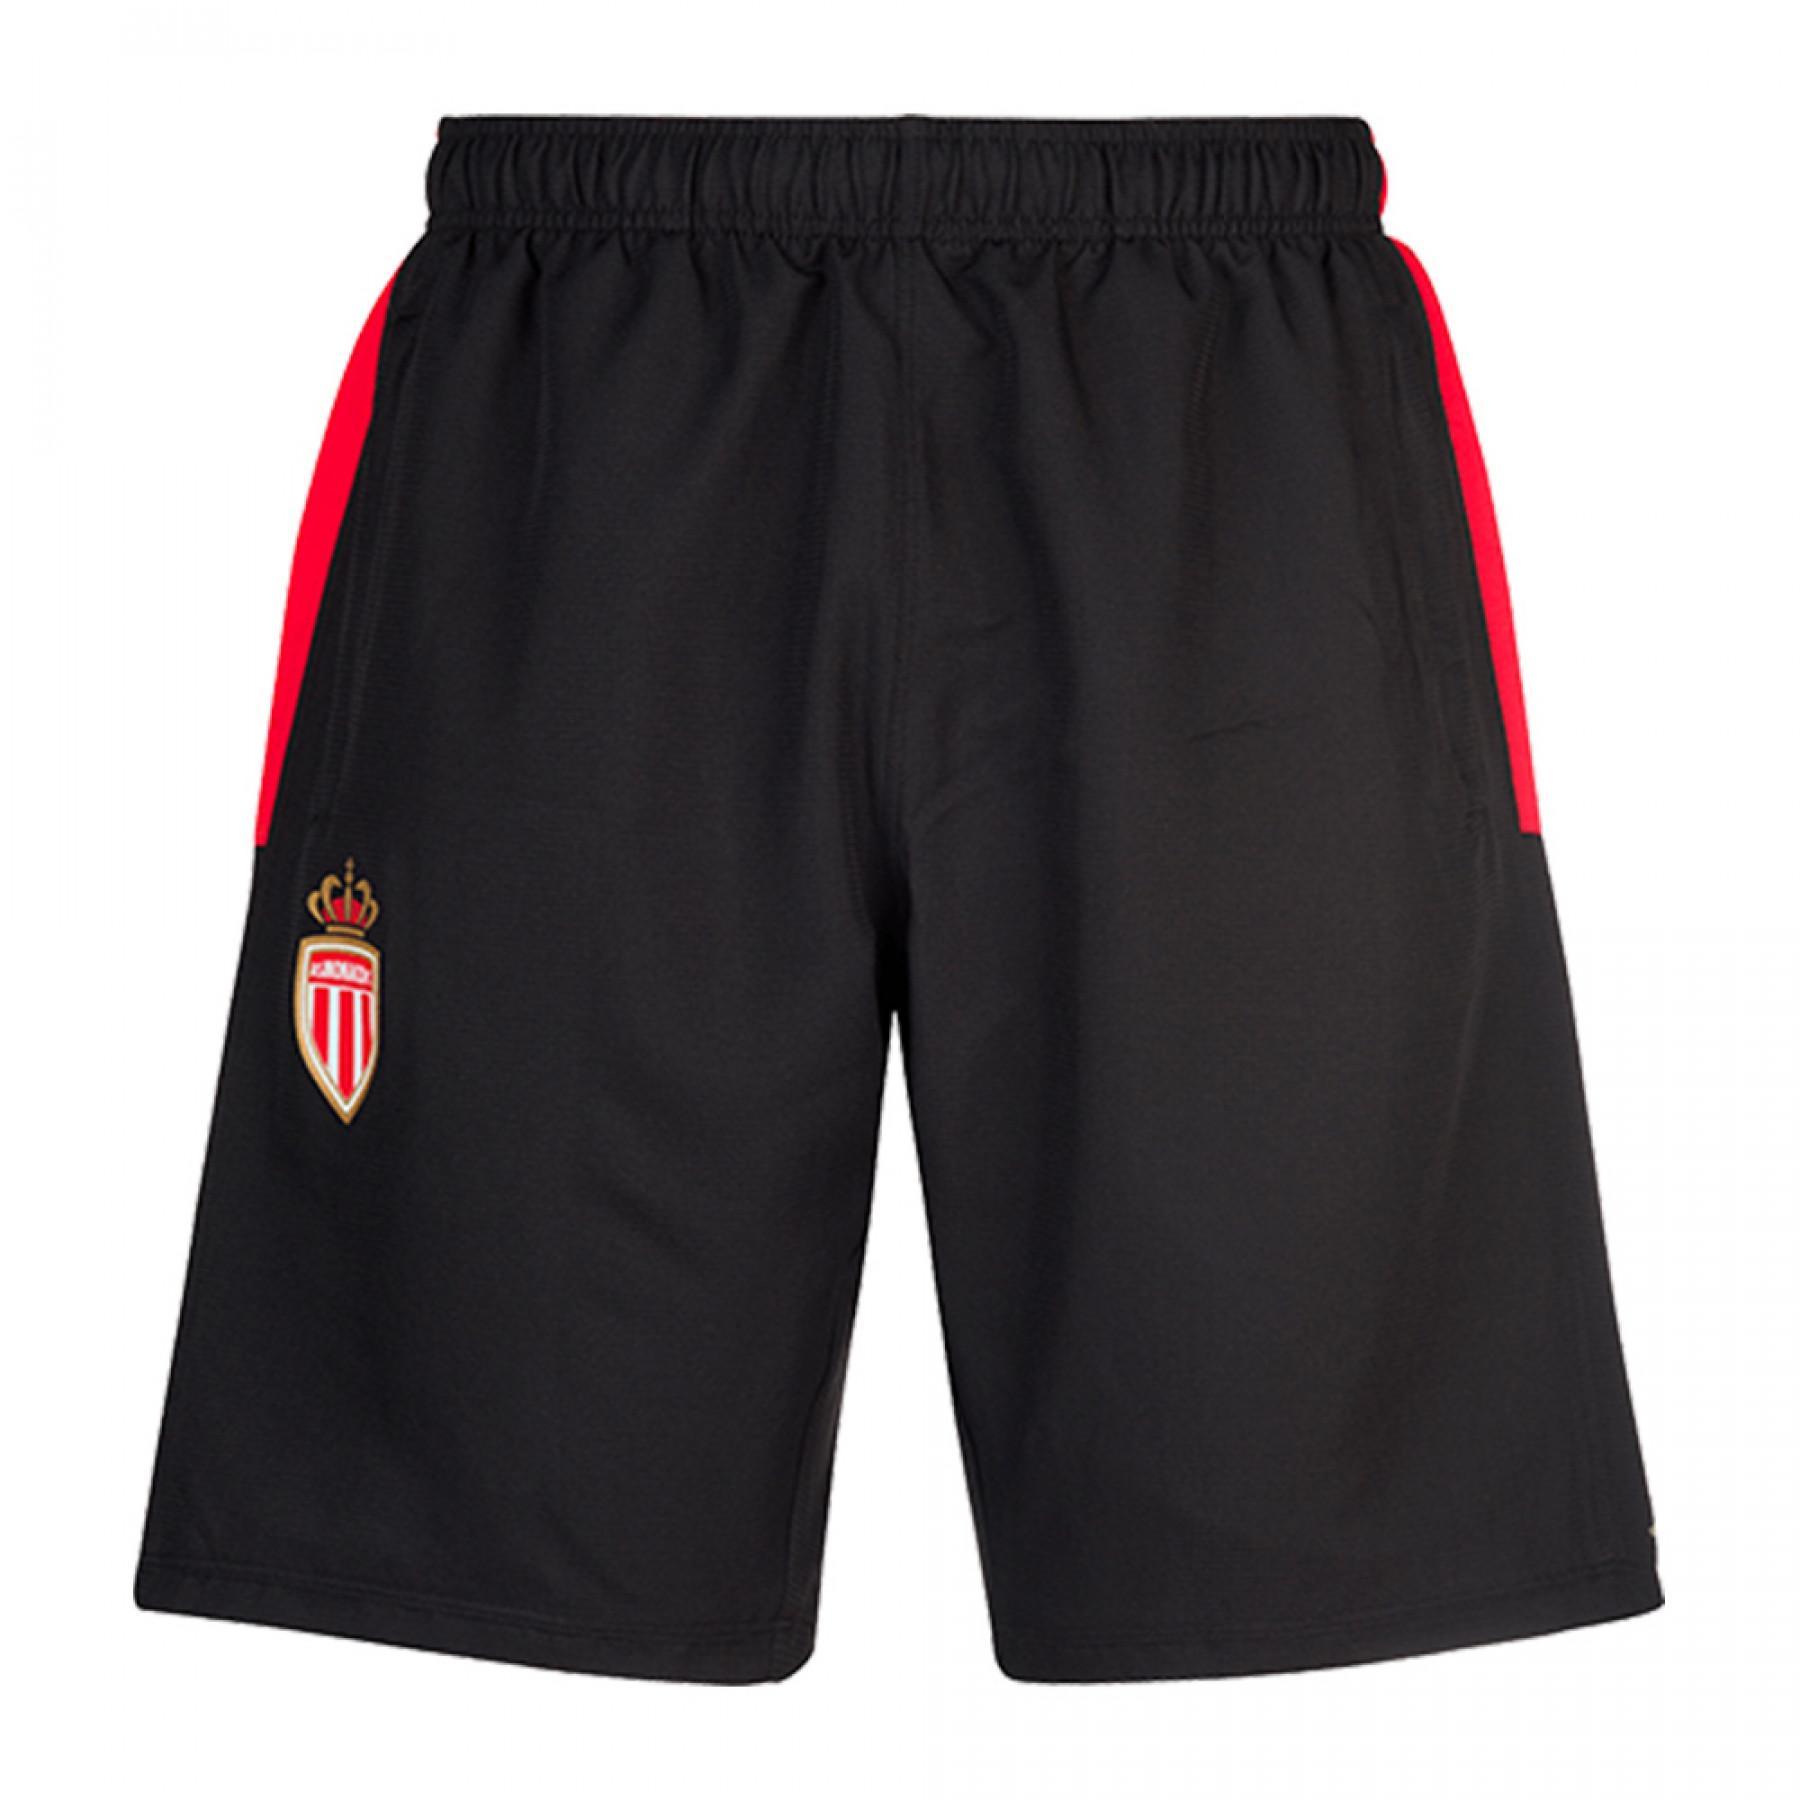 Kinder shorts alberg 3 AS Monaco